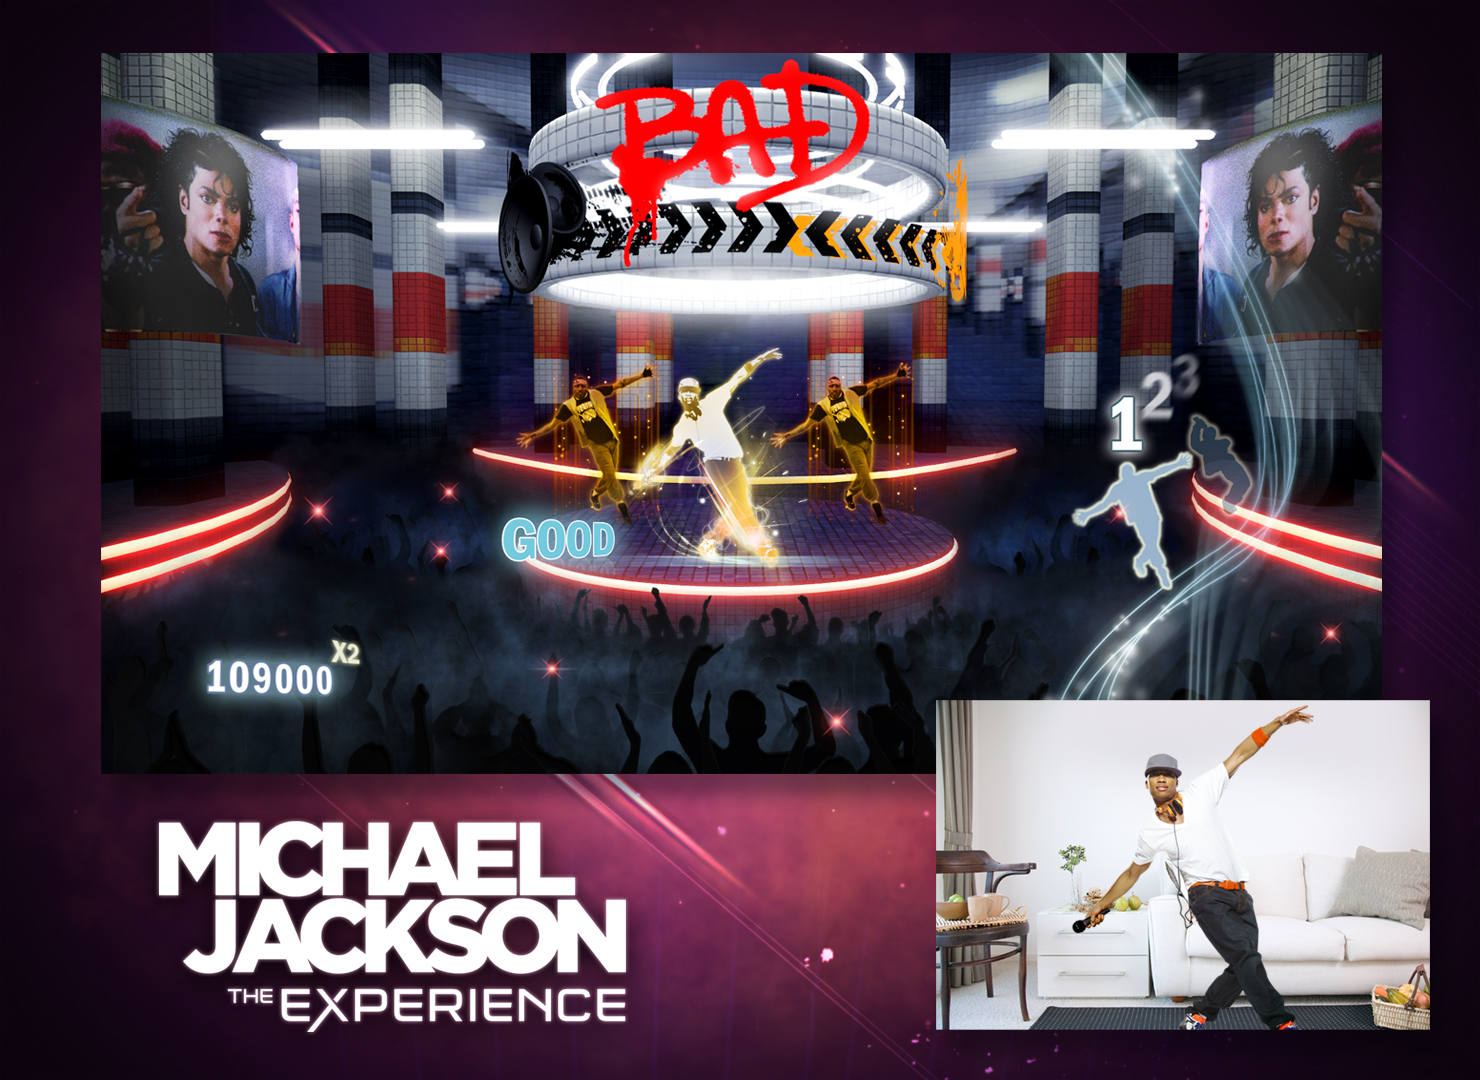 Michael Jackson The Experience (Xbox 360) Ubisoft, 8888526292 - image 3 of 6